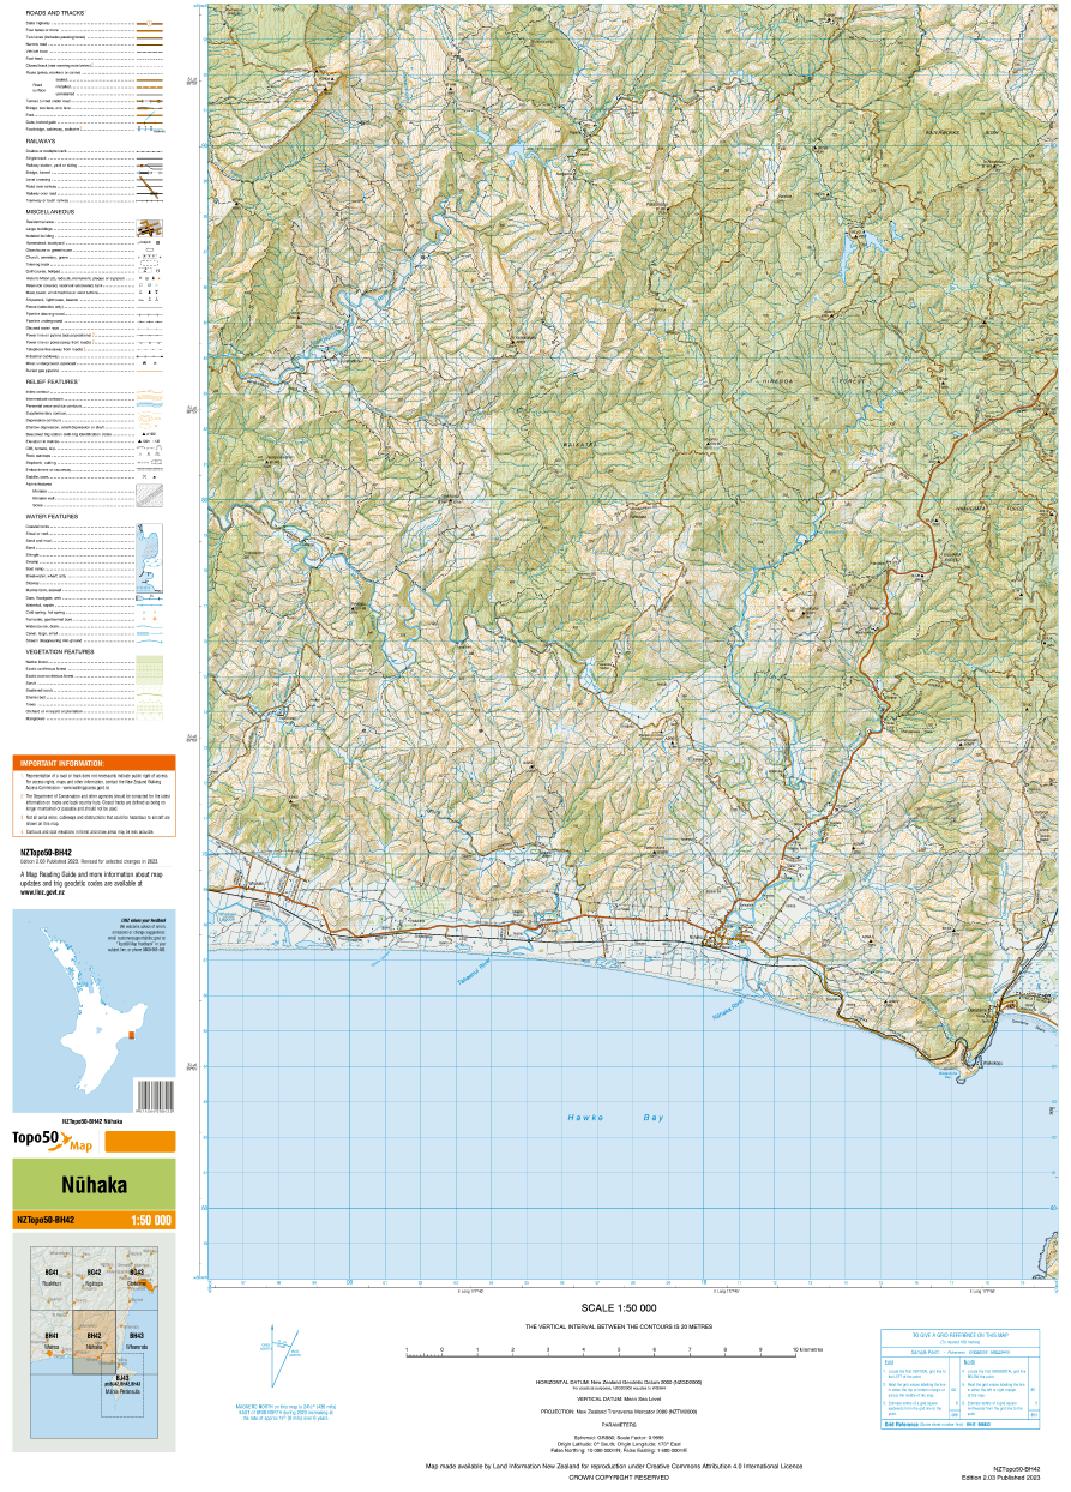 Topo map of Nuhaka